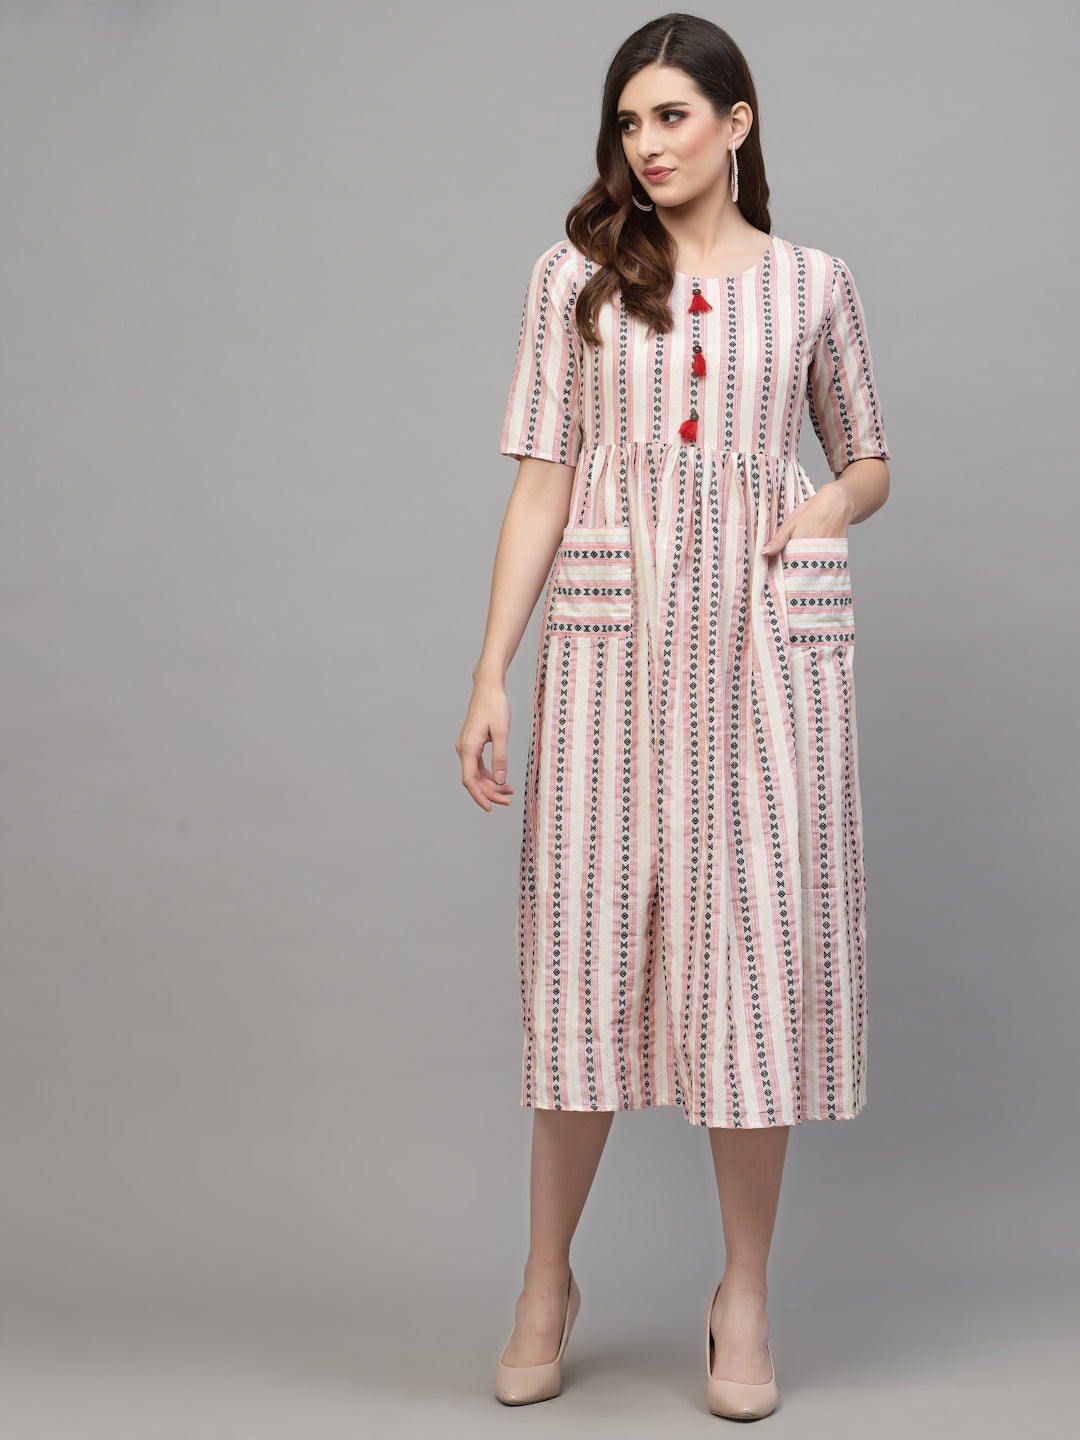 Woven Designed Cotton Blend Ethnic Dress